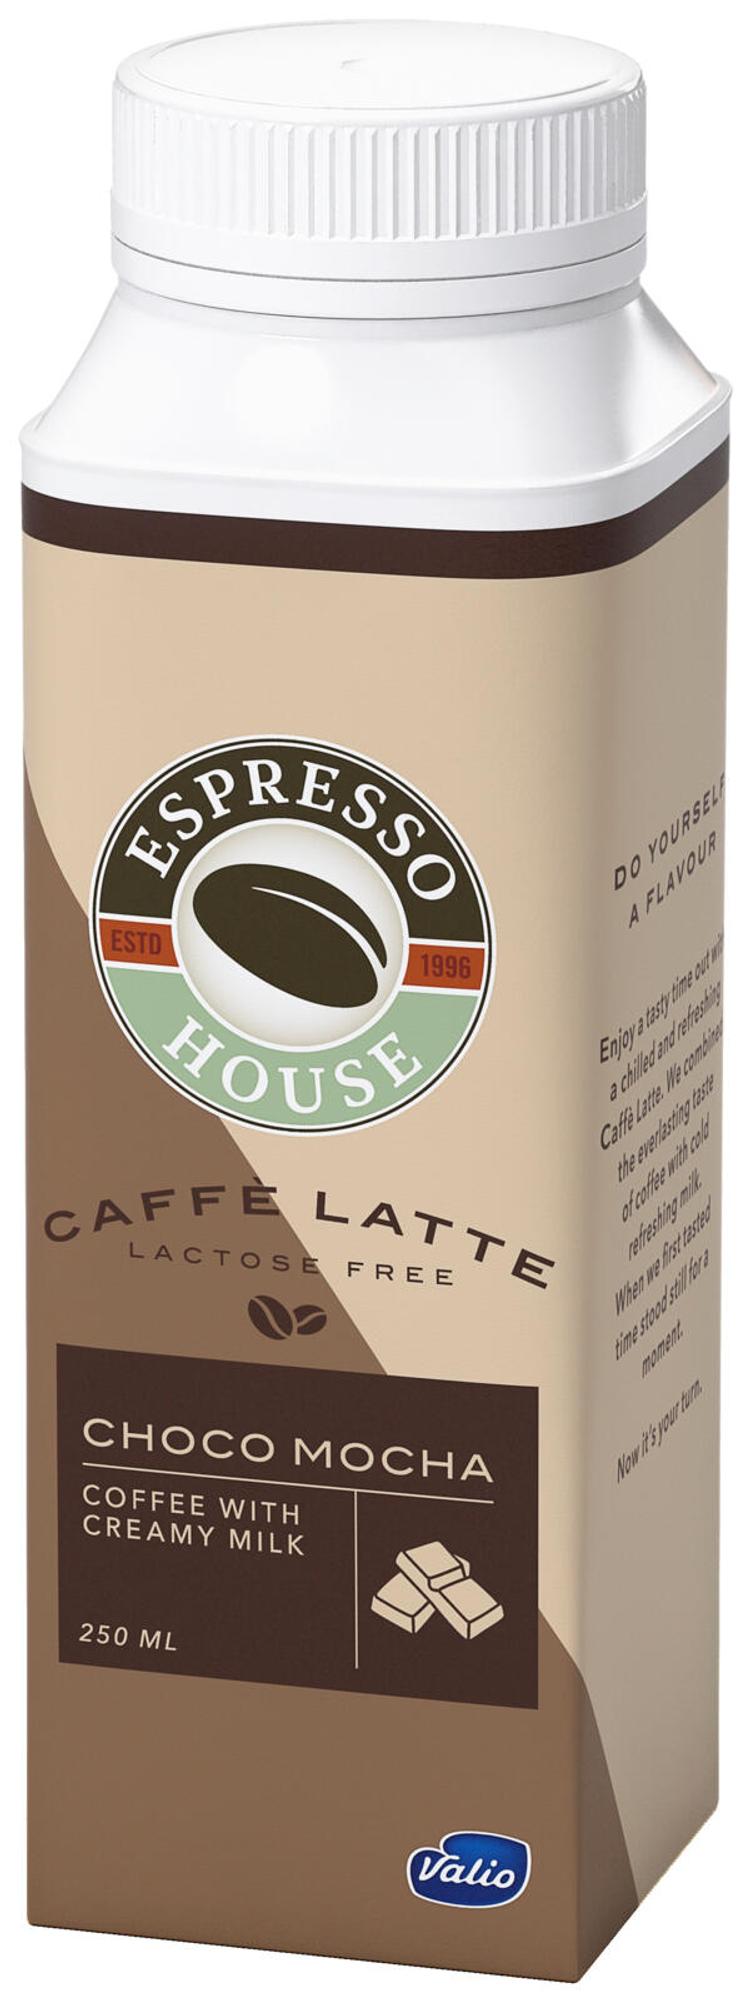 Espresso House Caffè Latte Choco Mocha lactose free 250 ml